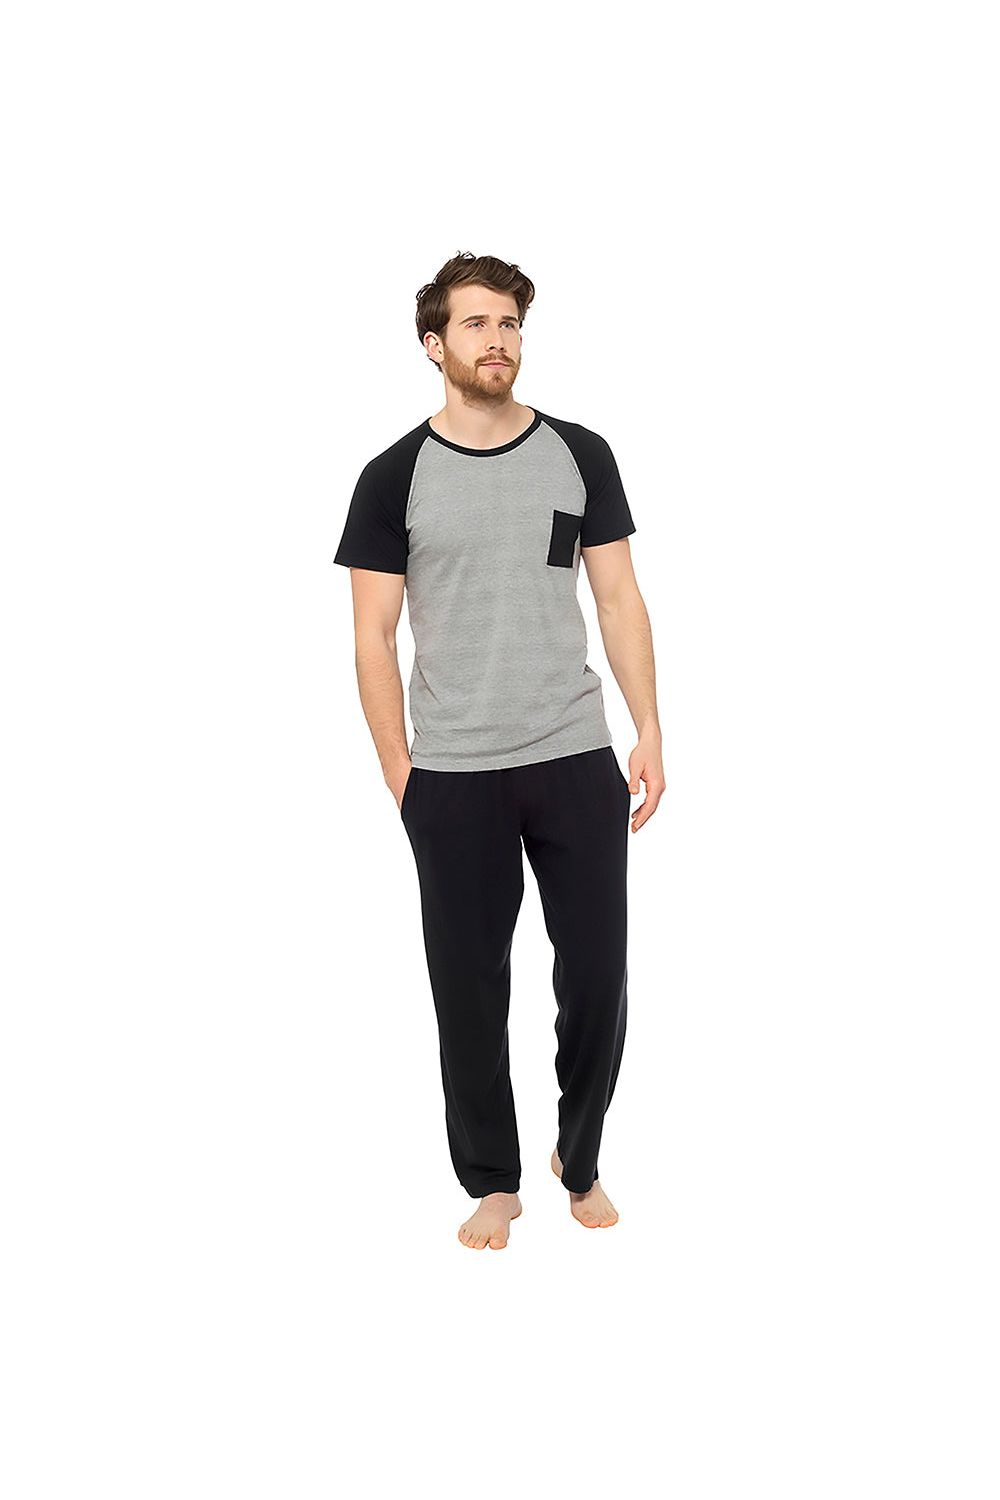 Mens Pocket Jersey Cotton Long Pyjamas - Pyjamas.com